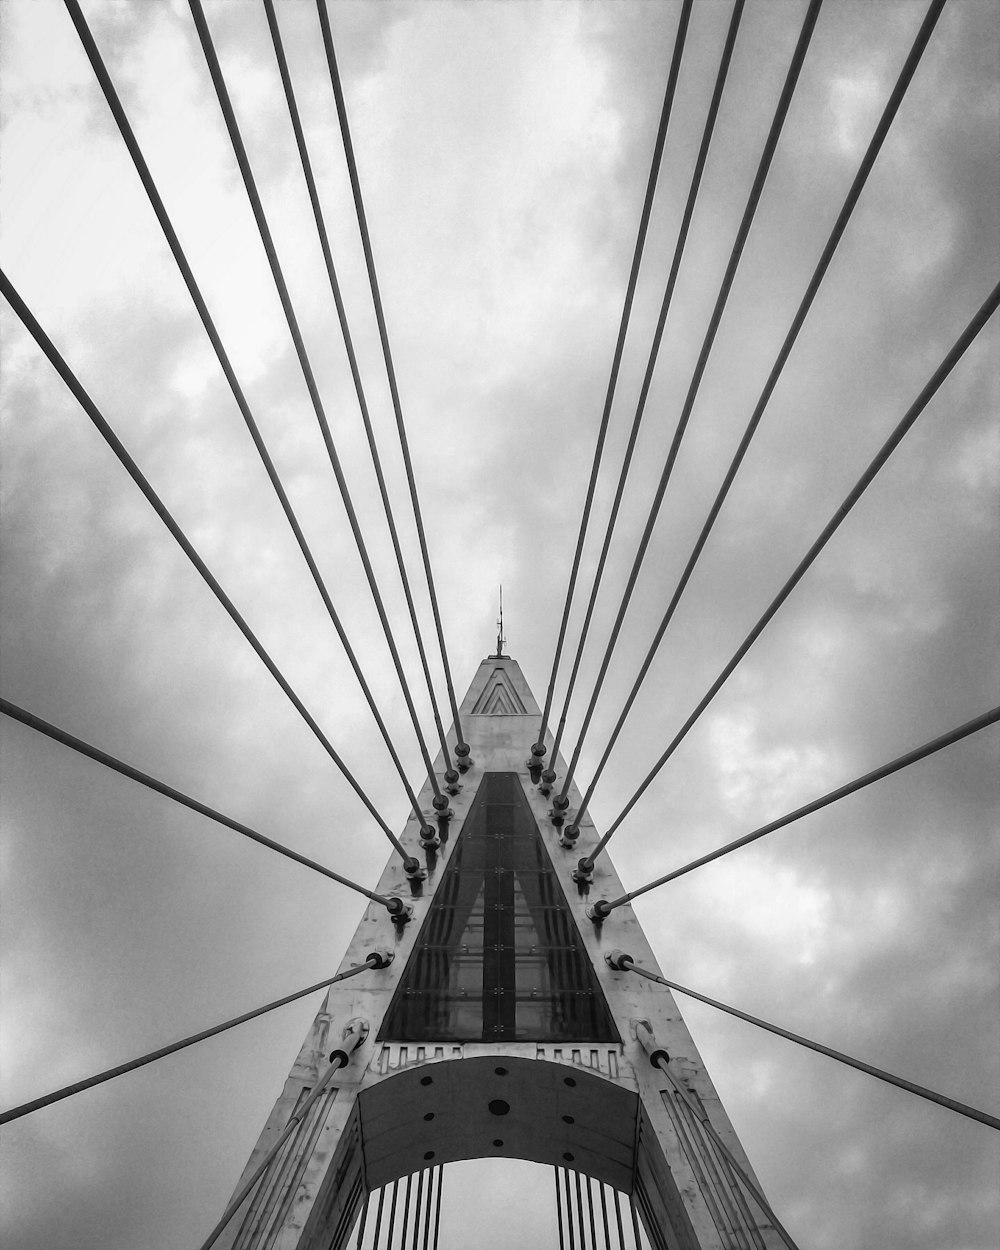 gray concrete bridge suspension